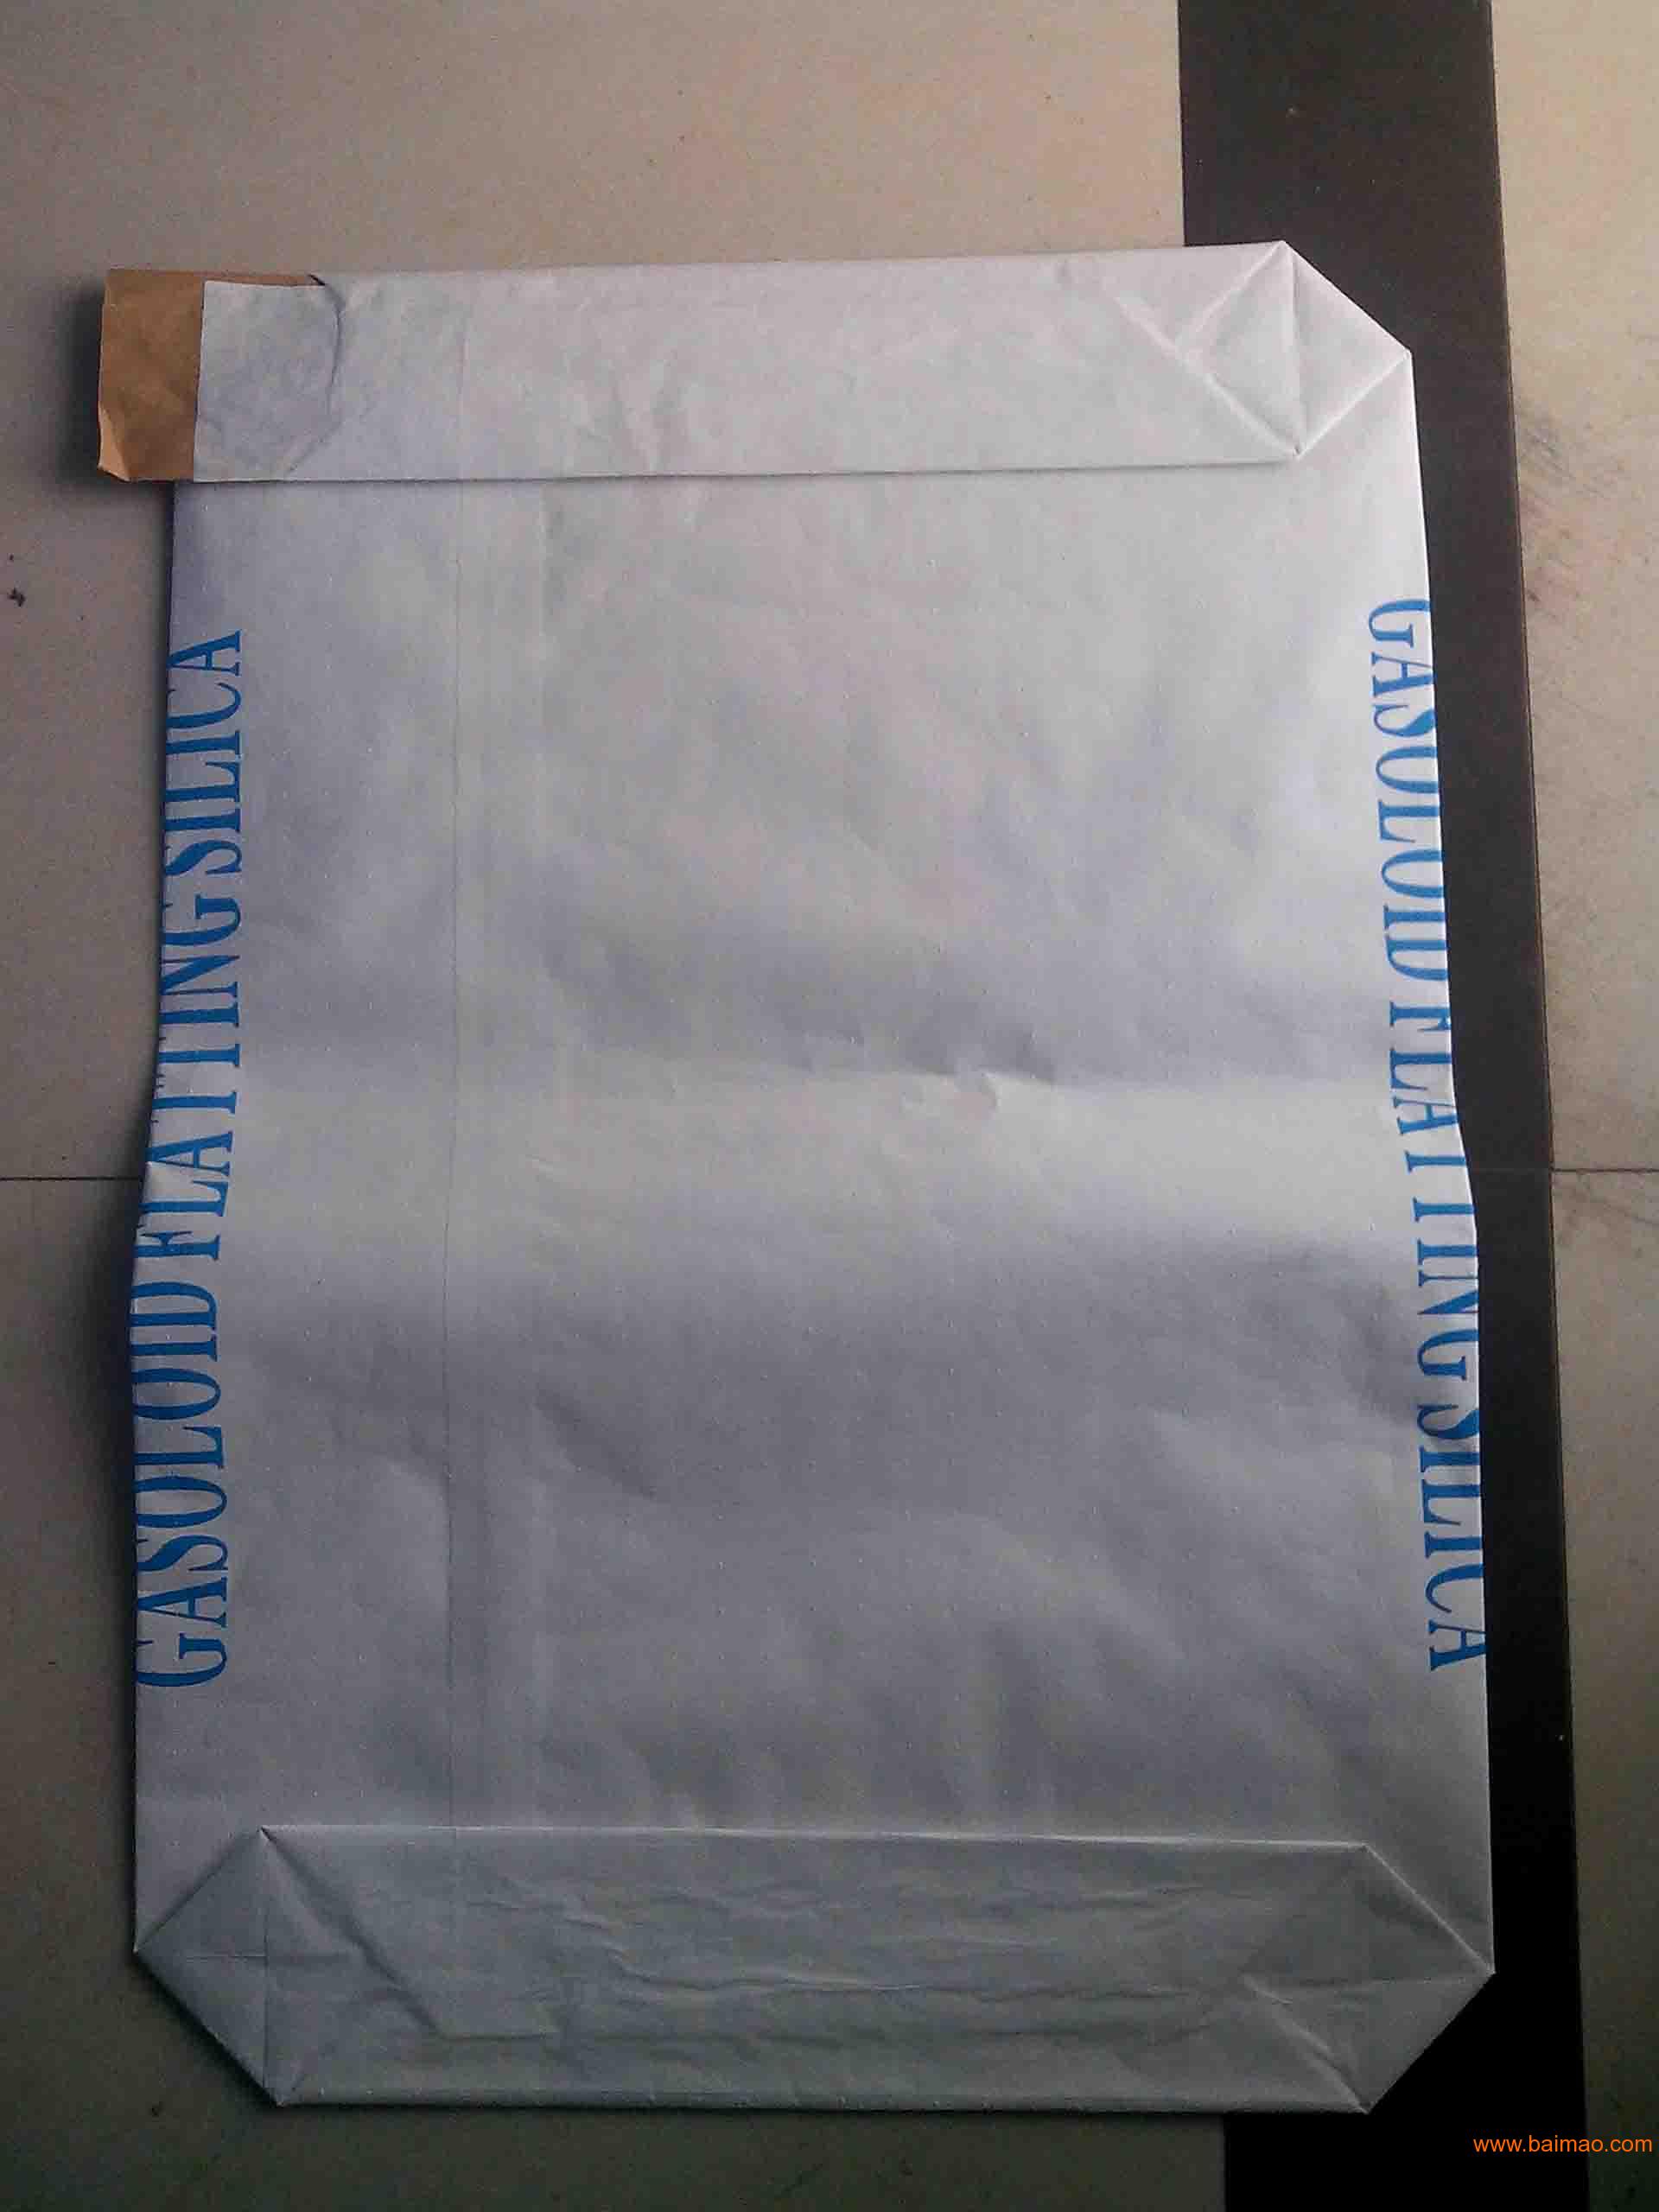 prev1next该厂家共有1条 [纸袋] 供应信息联系方式安徽顺科包装制品